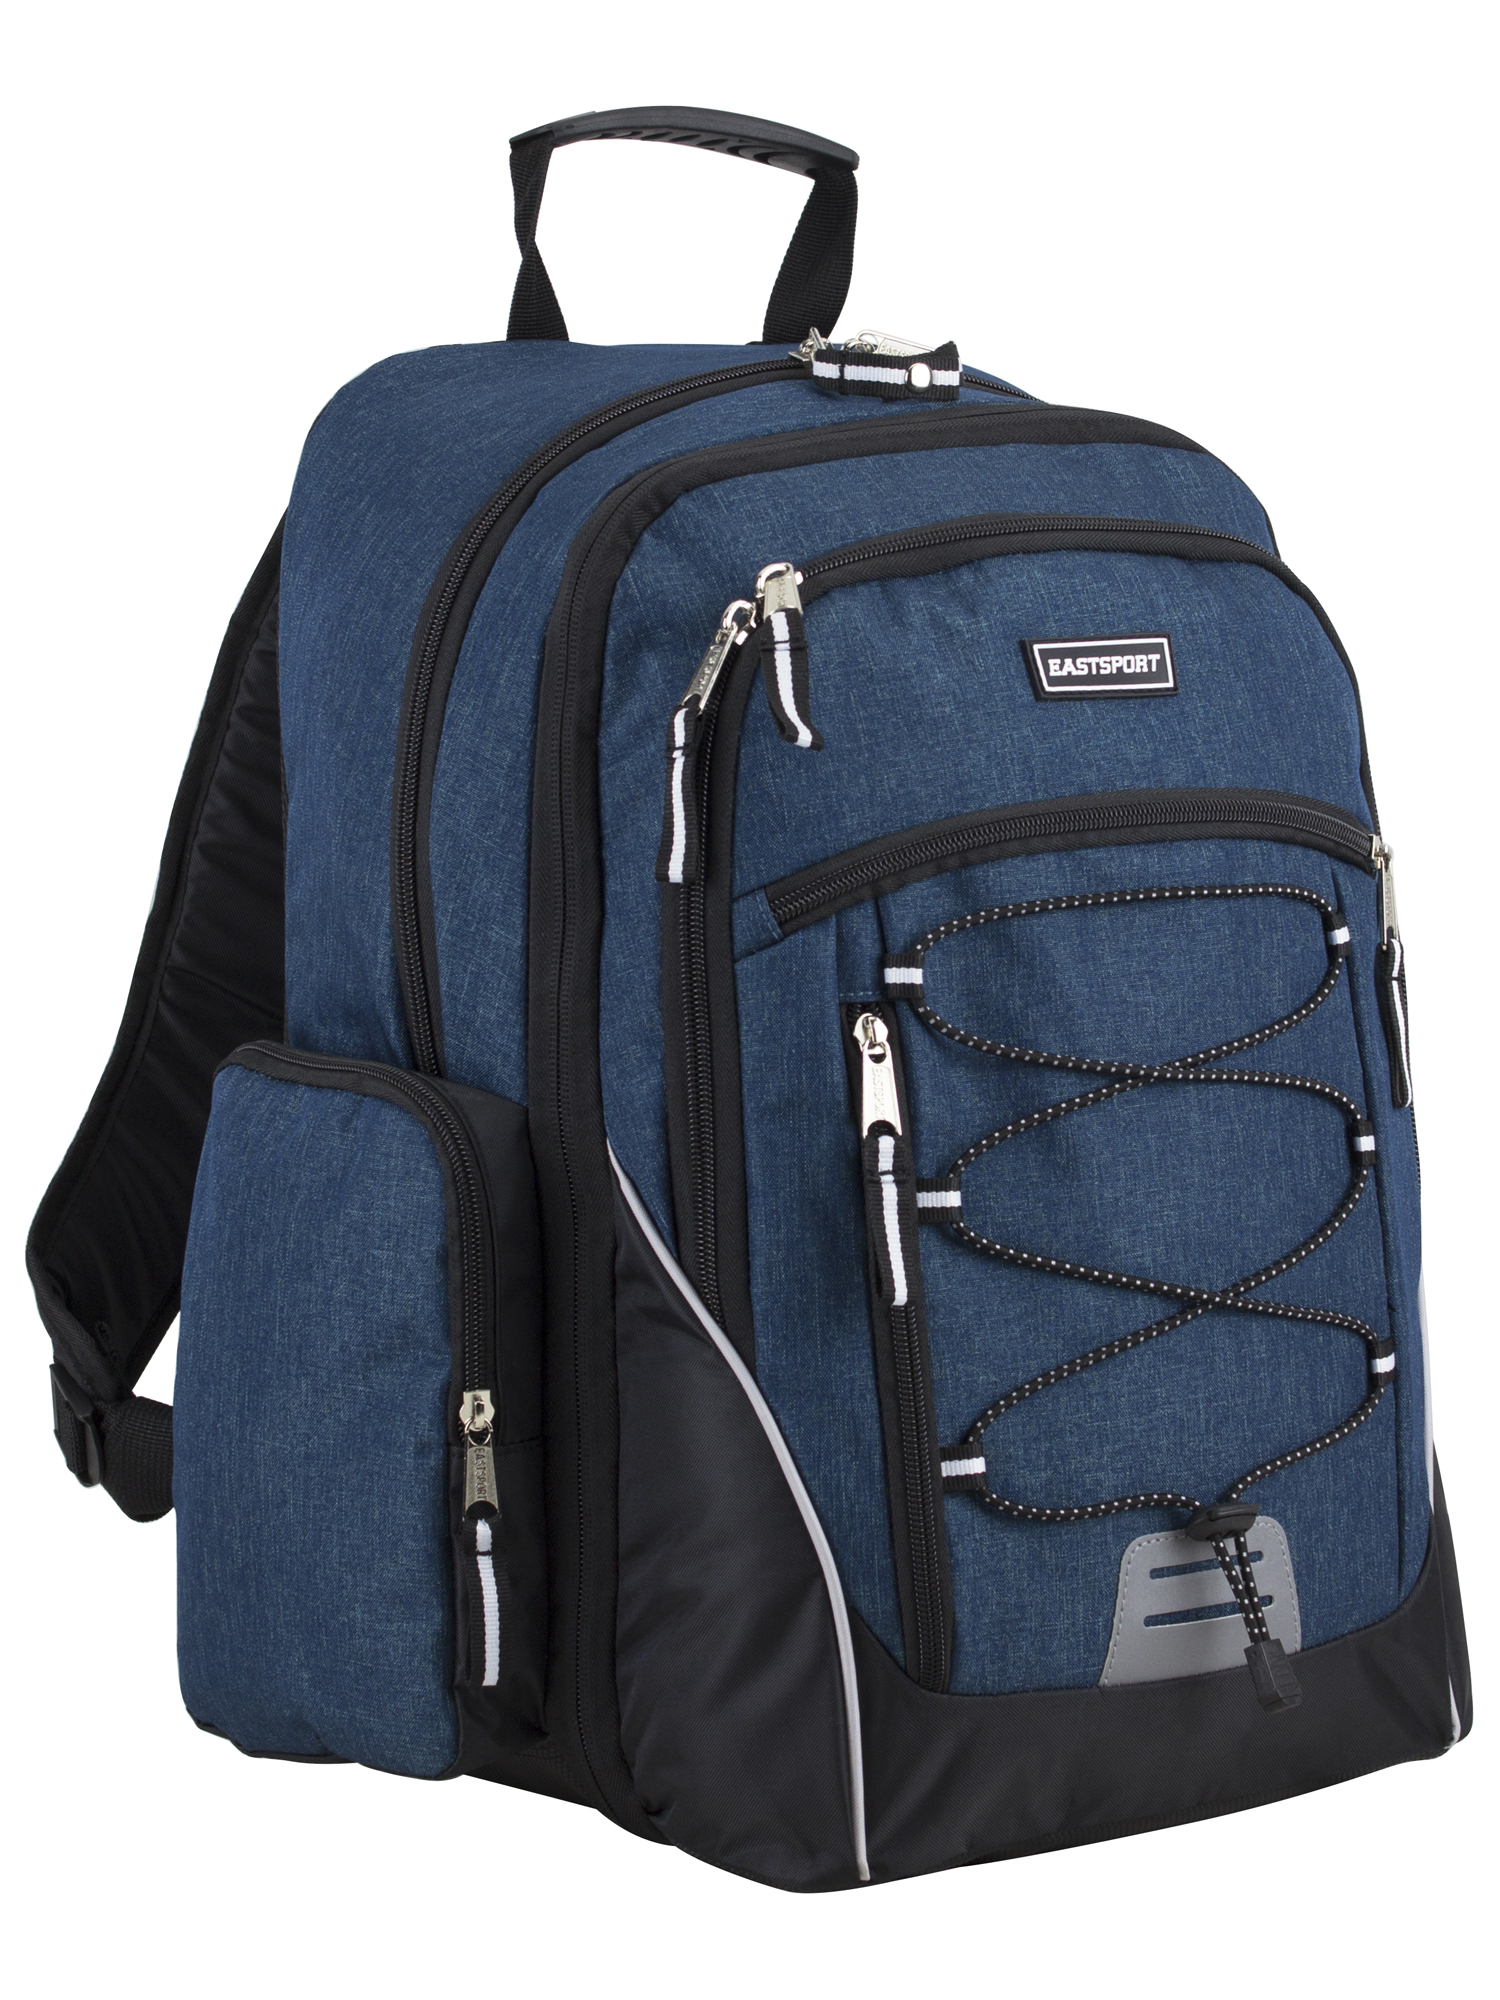 Eastsport Optimus Backpack, Navy - image 1 of 8